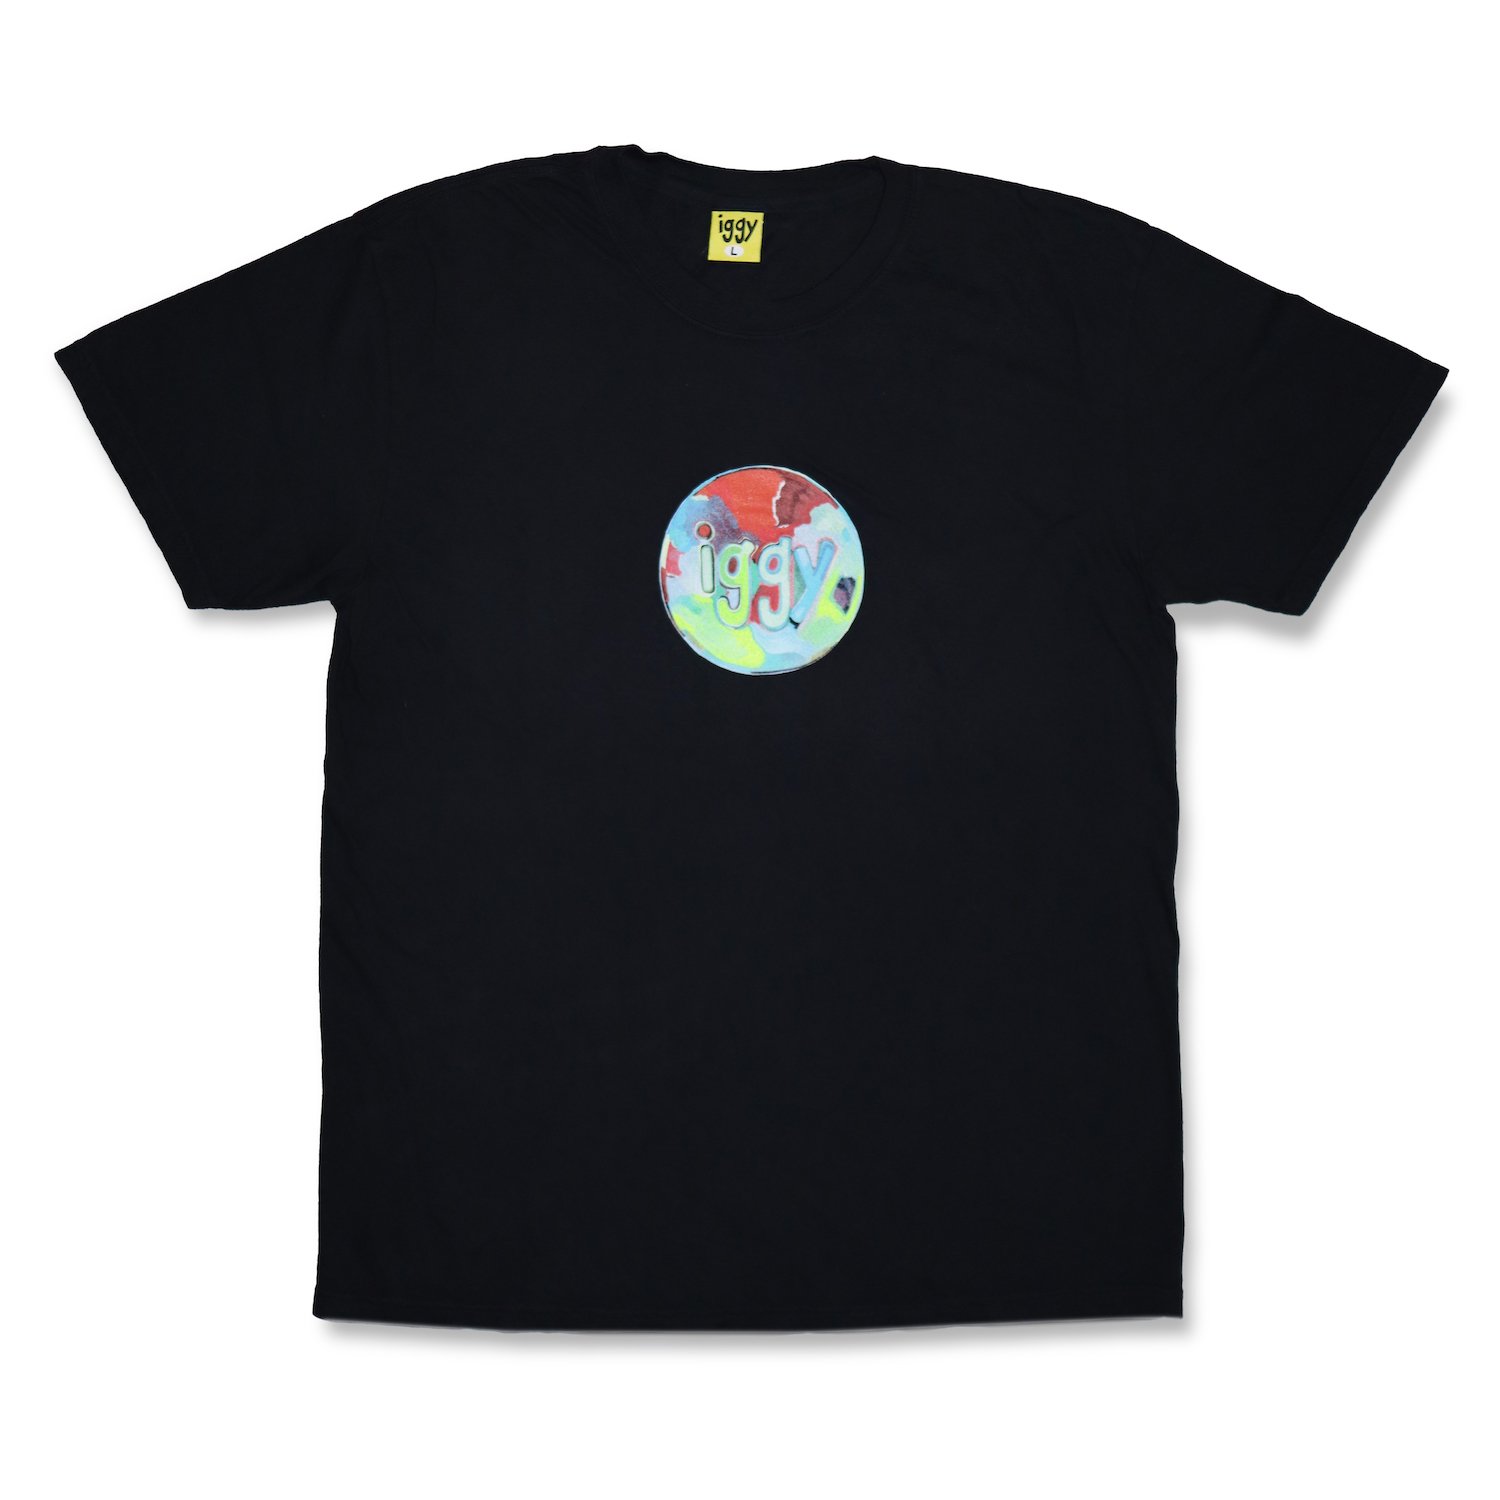 IGGY<br>Painterly Logo T Shirt<br>